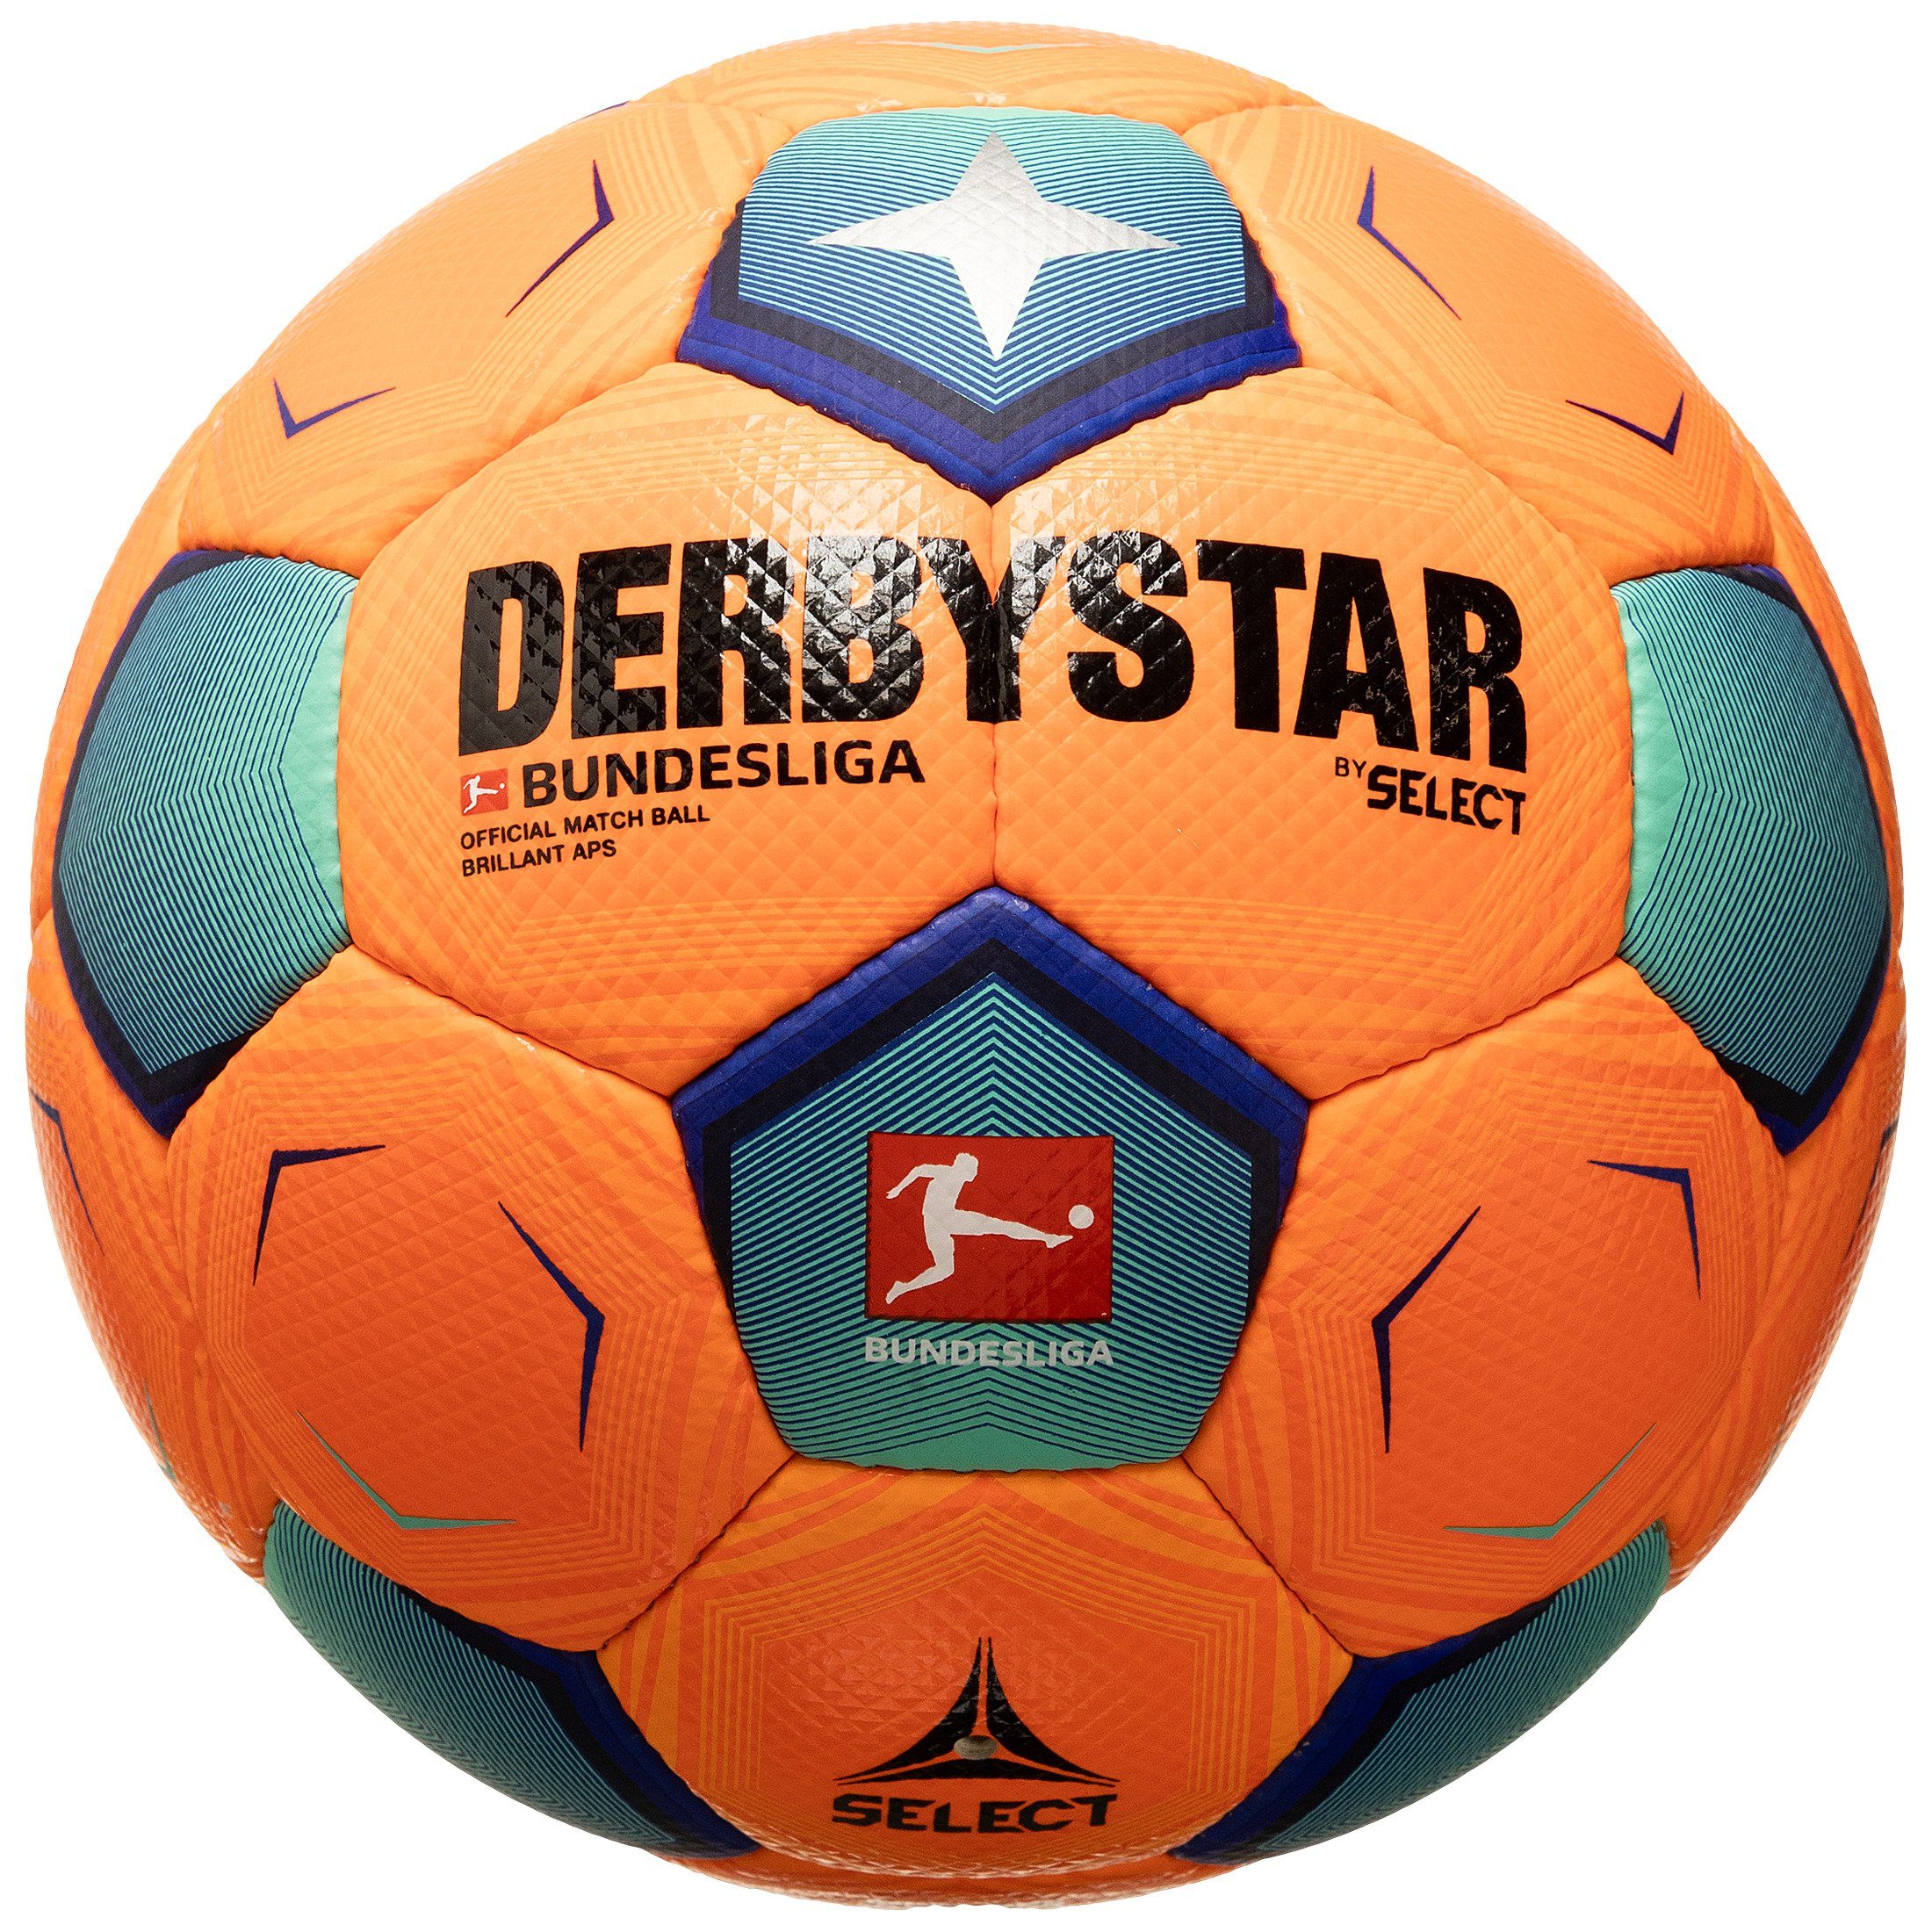 Derbystar Fußball Bundesliga Brillant APS High Visible v23 Fußball